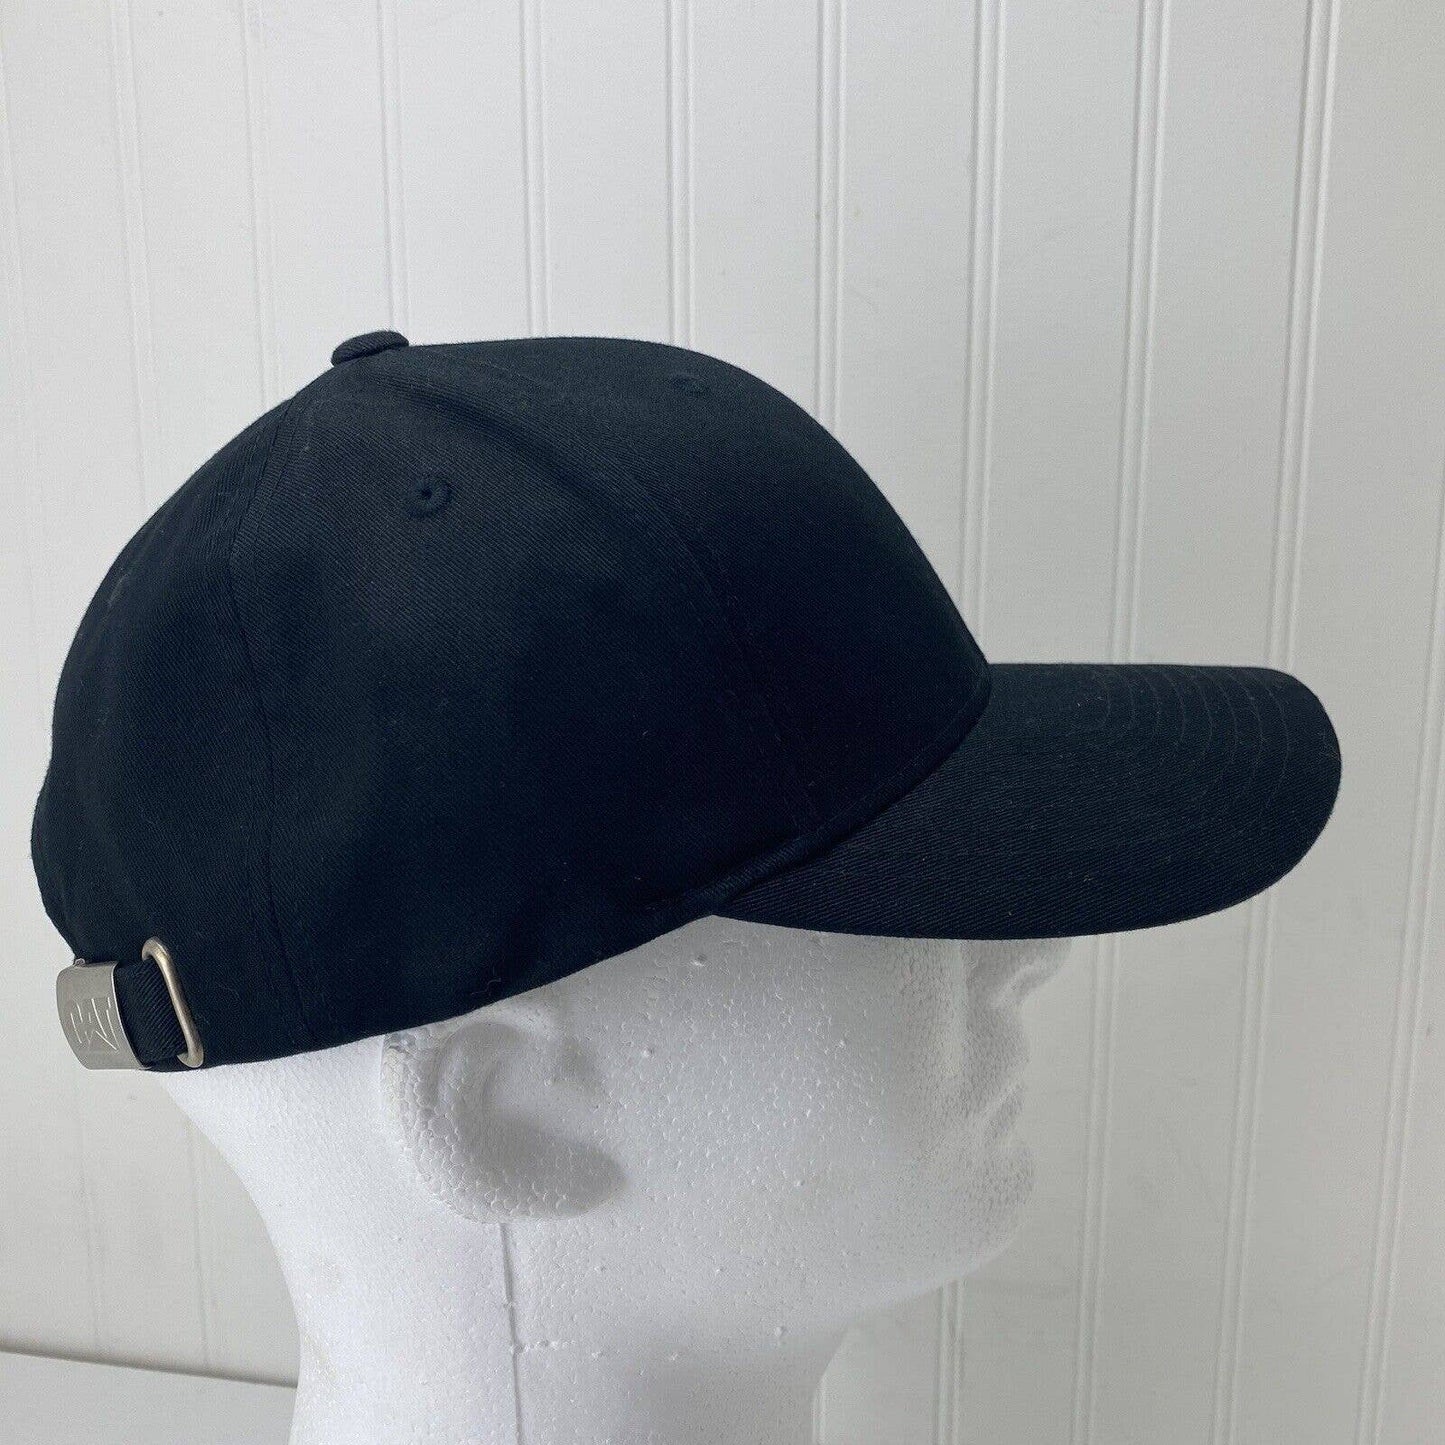 CATERPILLAR Diesel Black 6 Panel Adjustable Hat Gray Embroidered CAT Side Logo